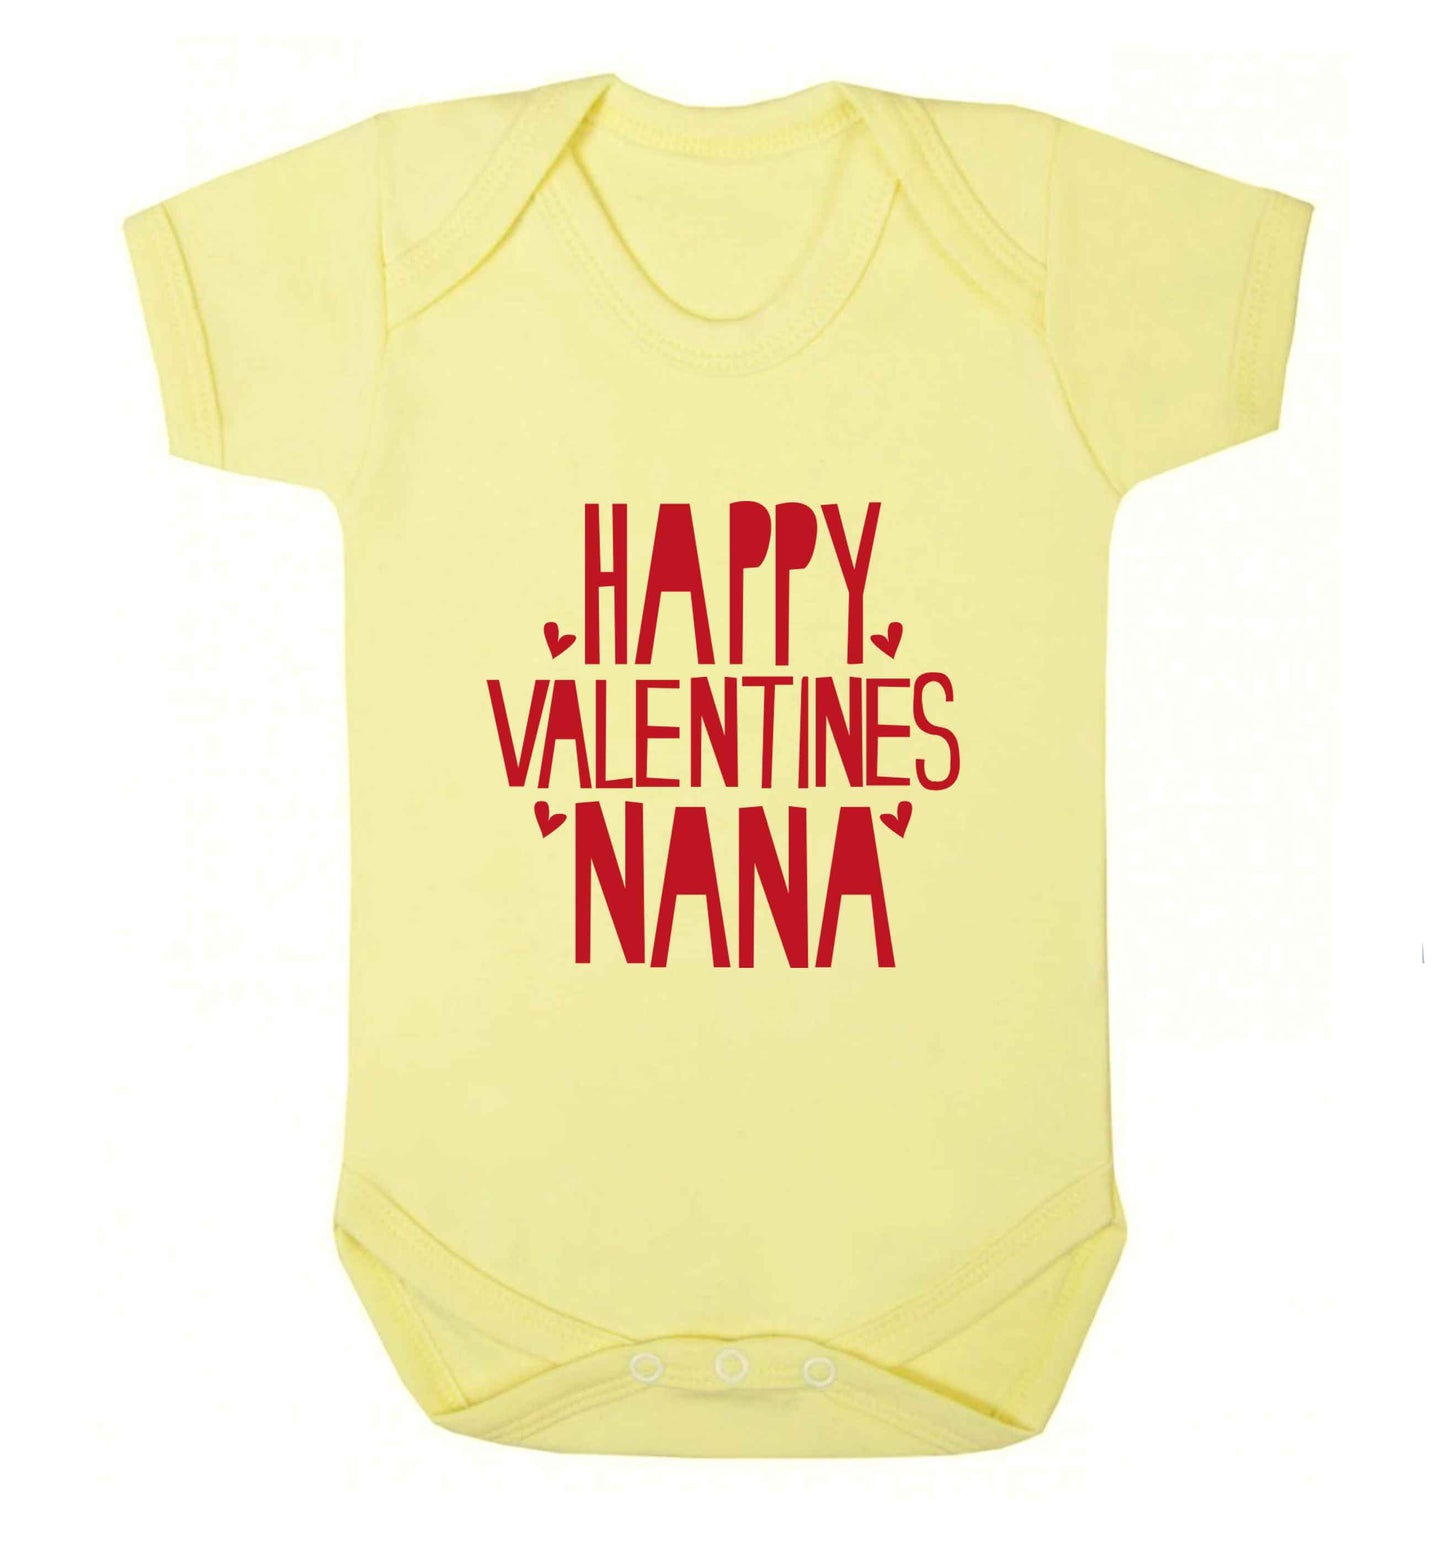 Happy valentines nana baby vest pale yellow 18-24 months